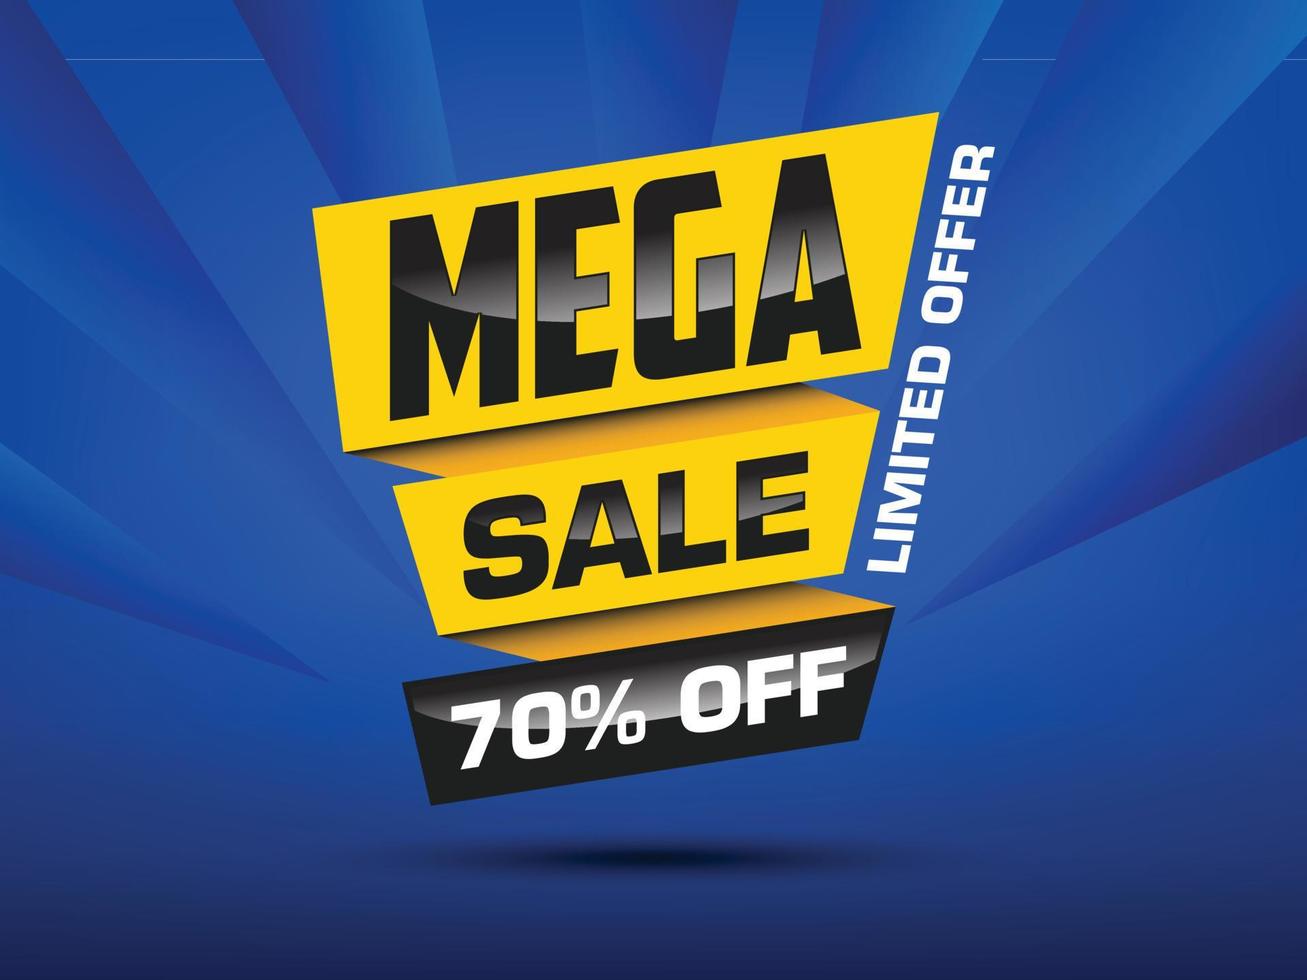 Promotion banner design, discount deal offer, marketing sales illustration with text Mega Sale. vector